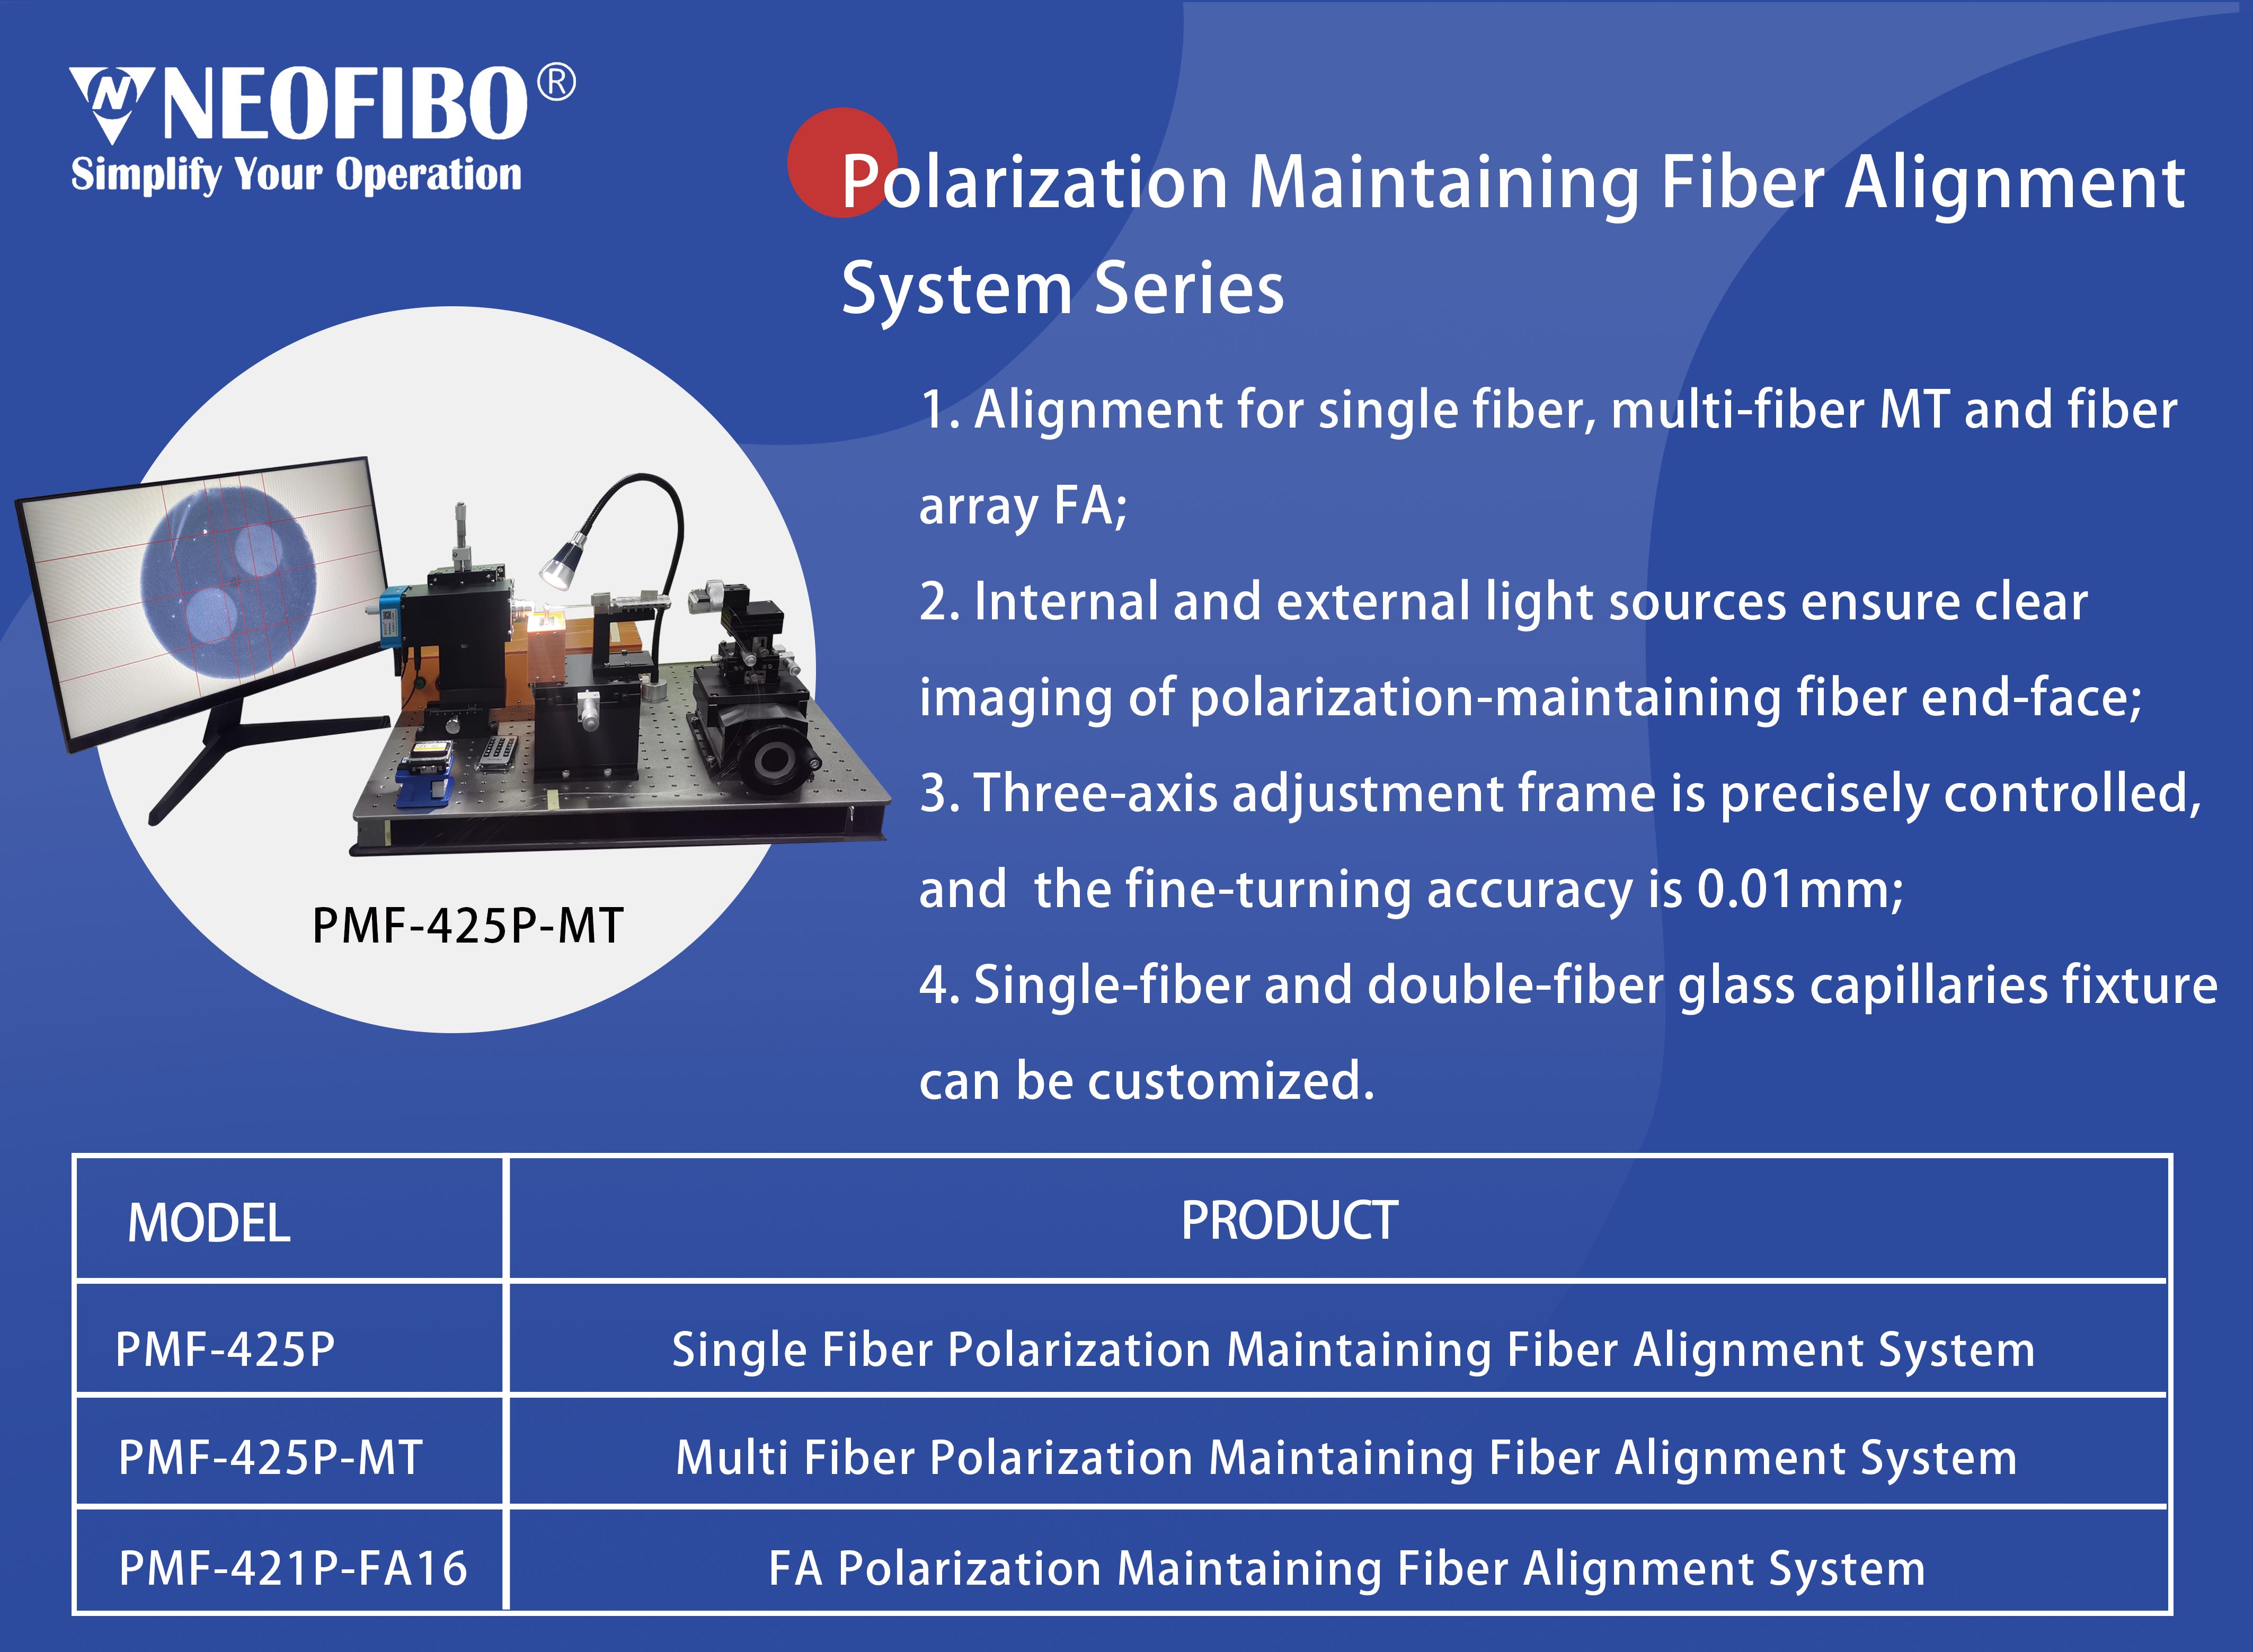 Neofibo polarization maintaining fiber alignment system series